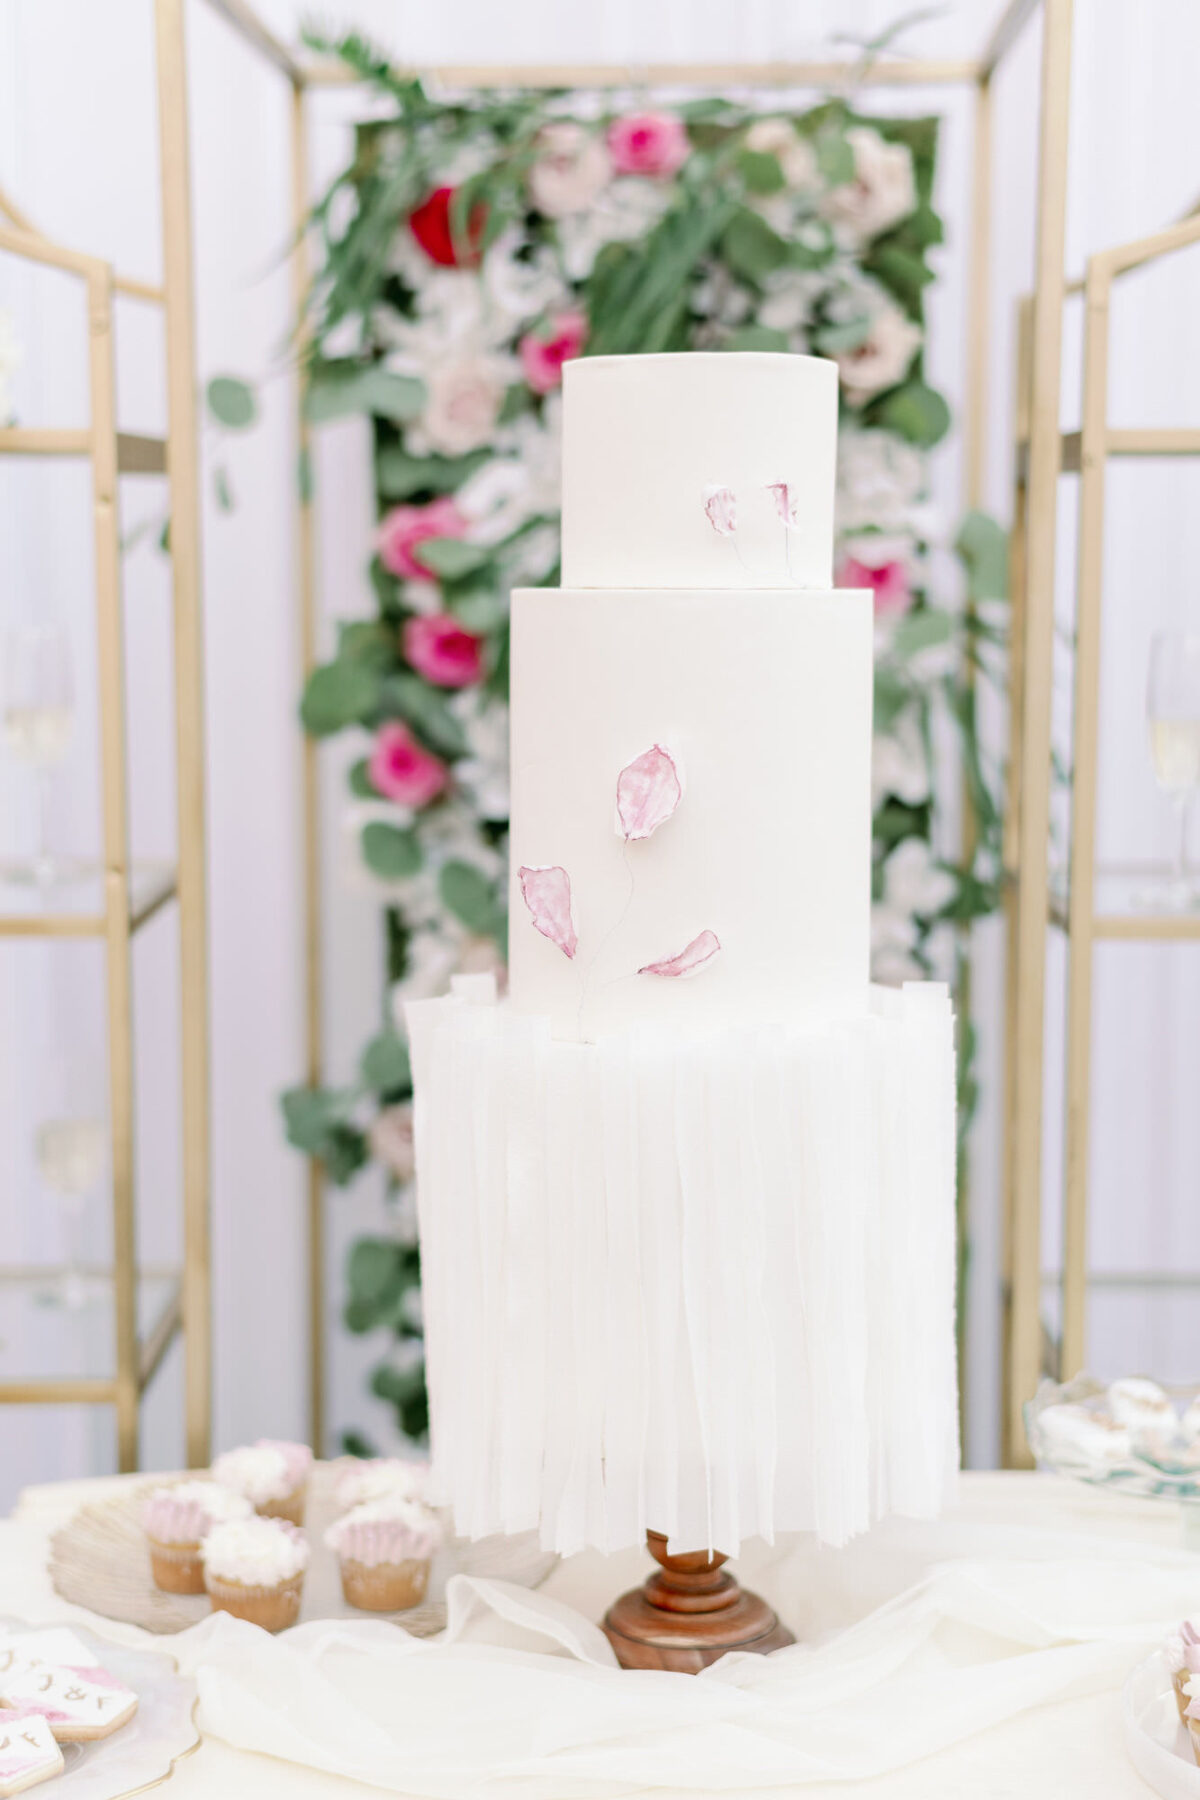 White wedding cakeWedding cookiesWedding cake table decorWhite wedding cake - Peony Park Photography